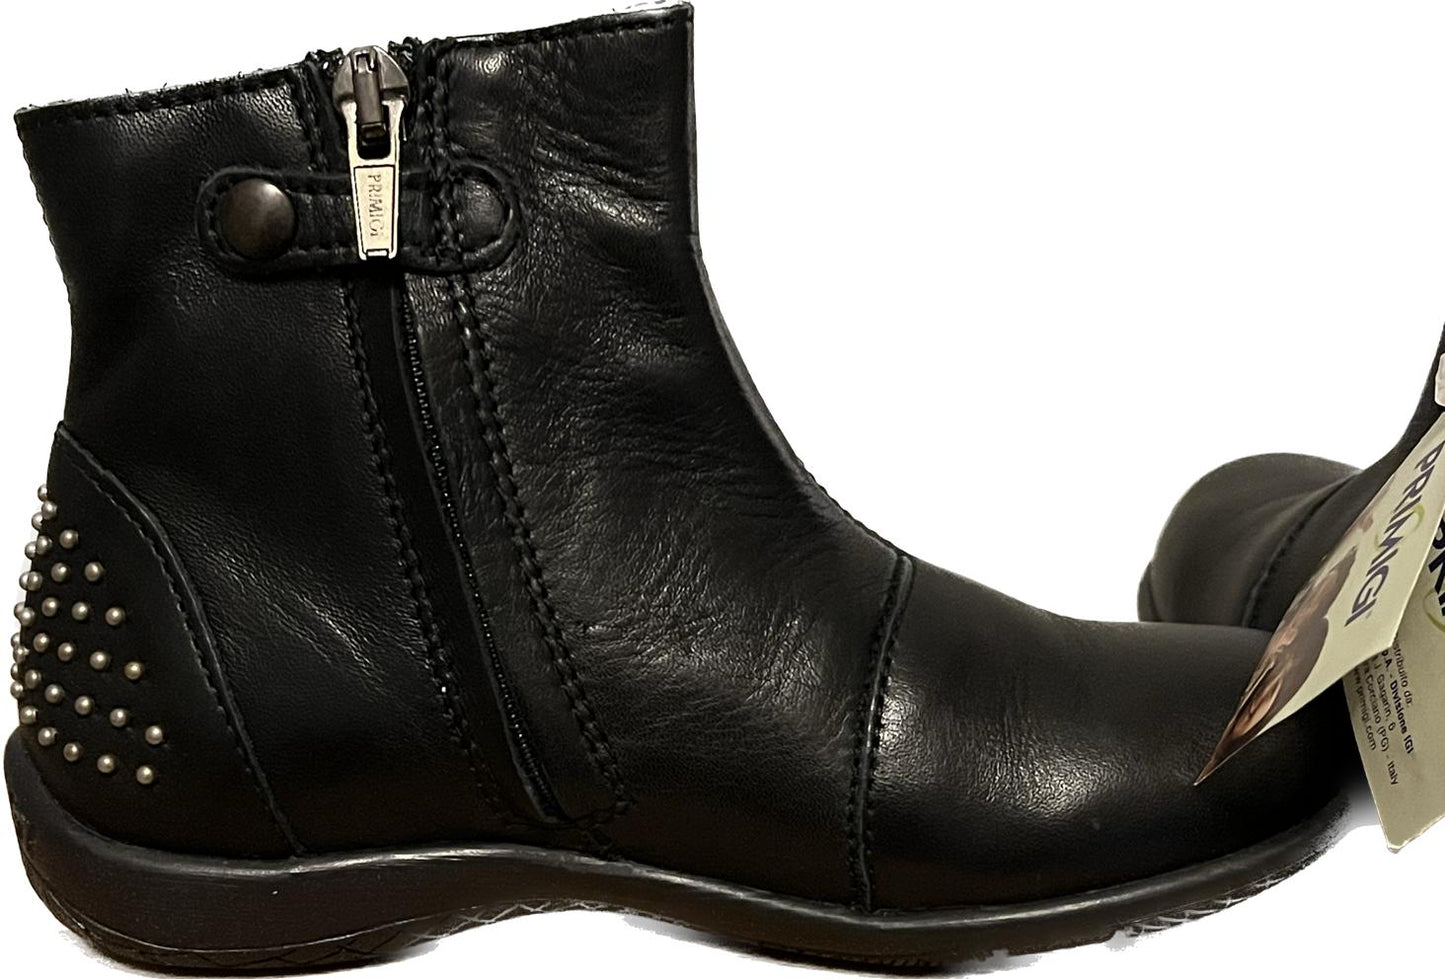 Primigi Black BRIDG Leather Boots size UK10.5 Child  NEW